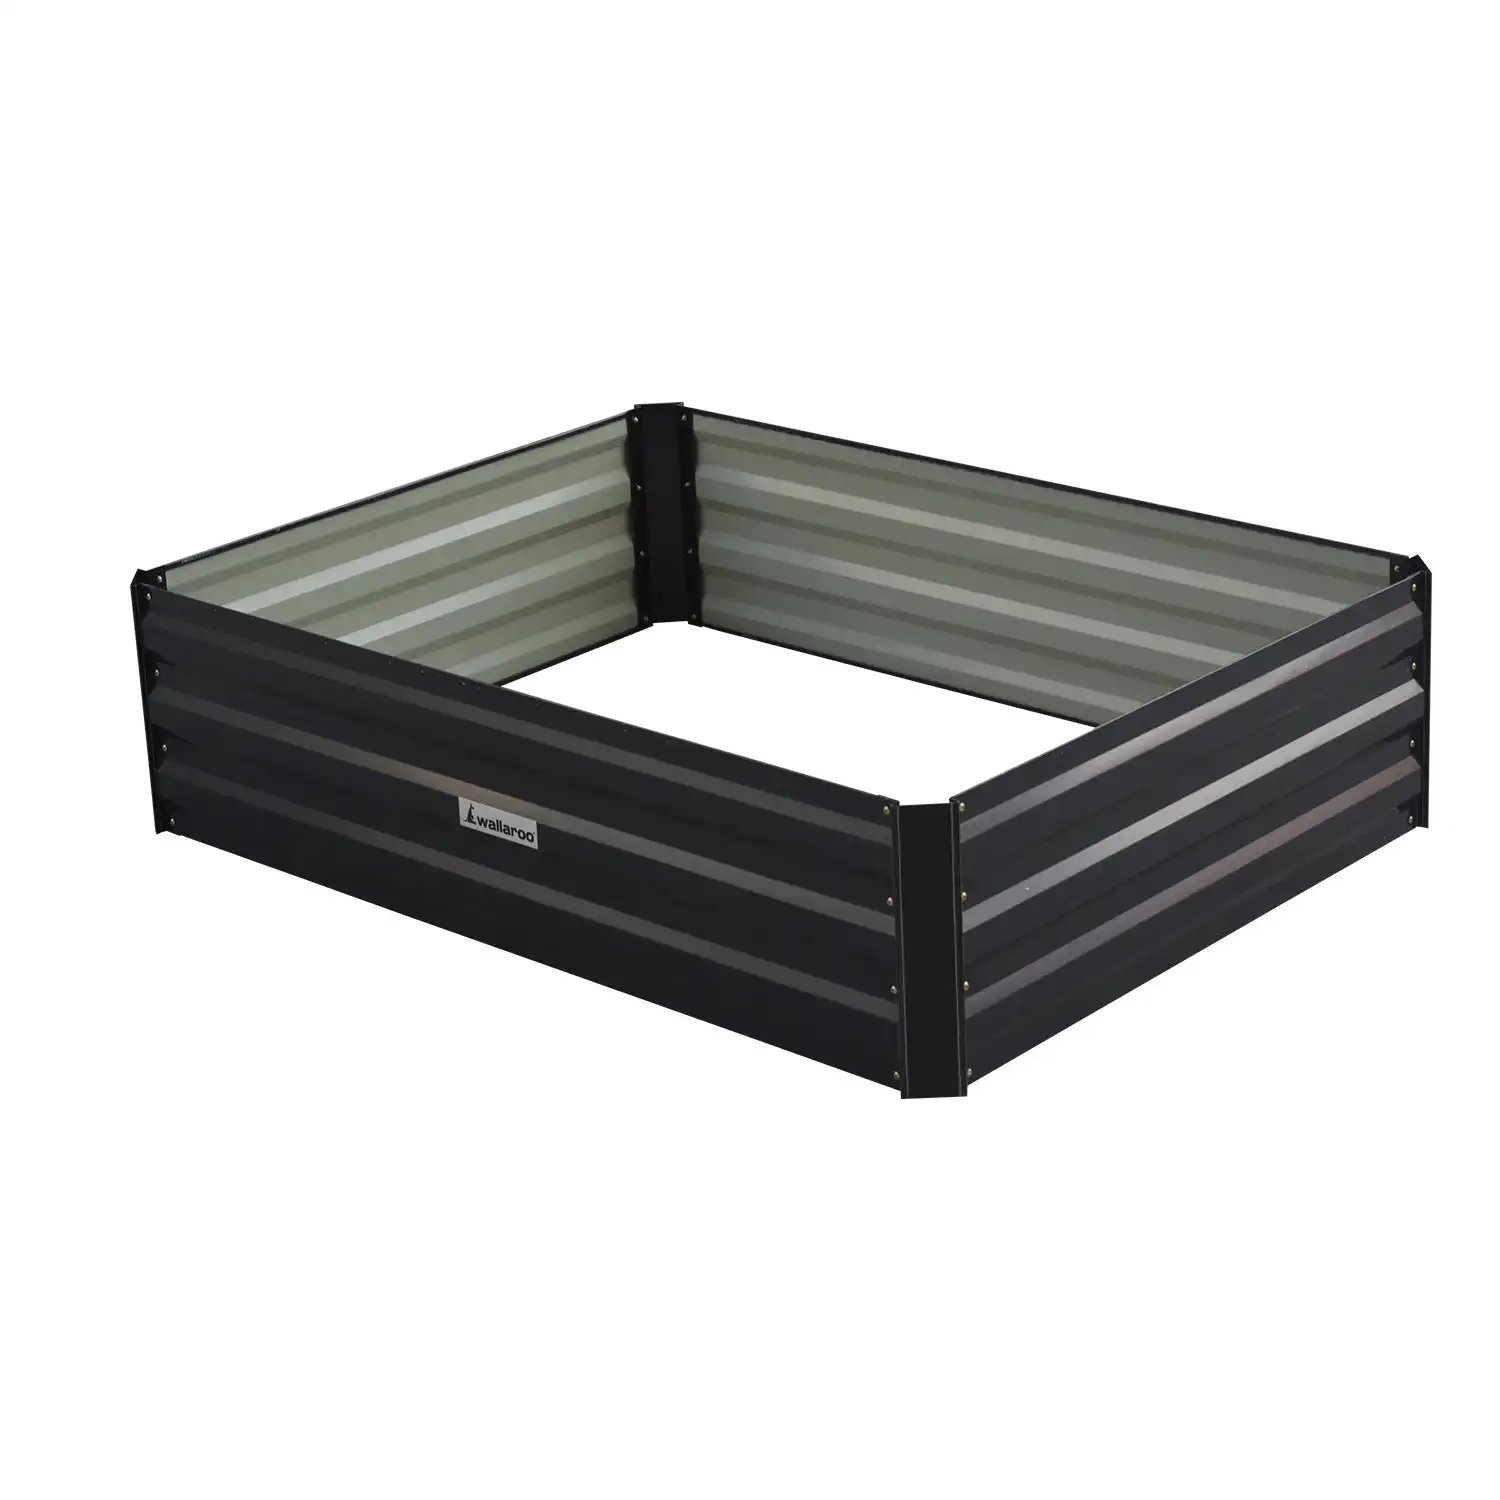 Wallaroo 120 x 90 x 30cm Galvanized Steel Garden Bed - Black